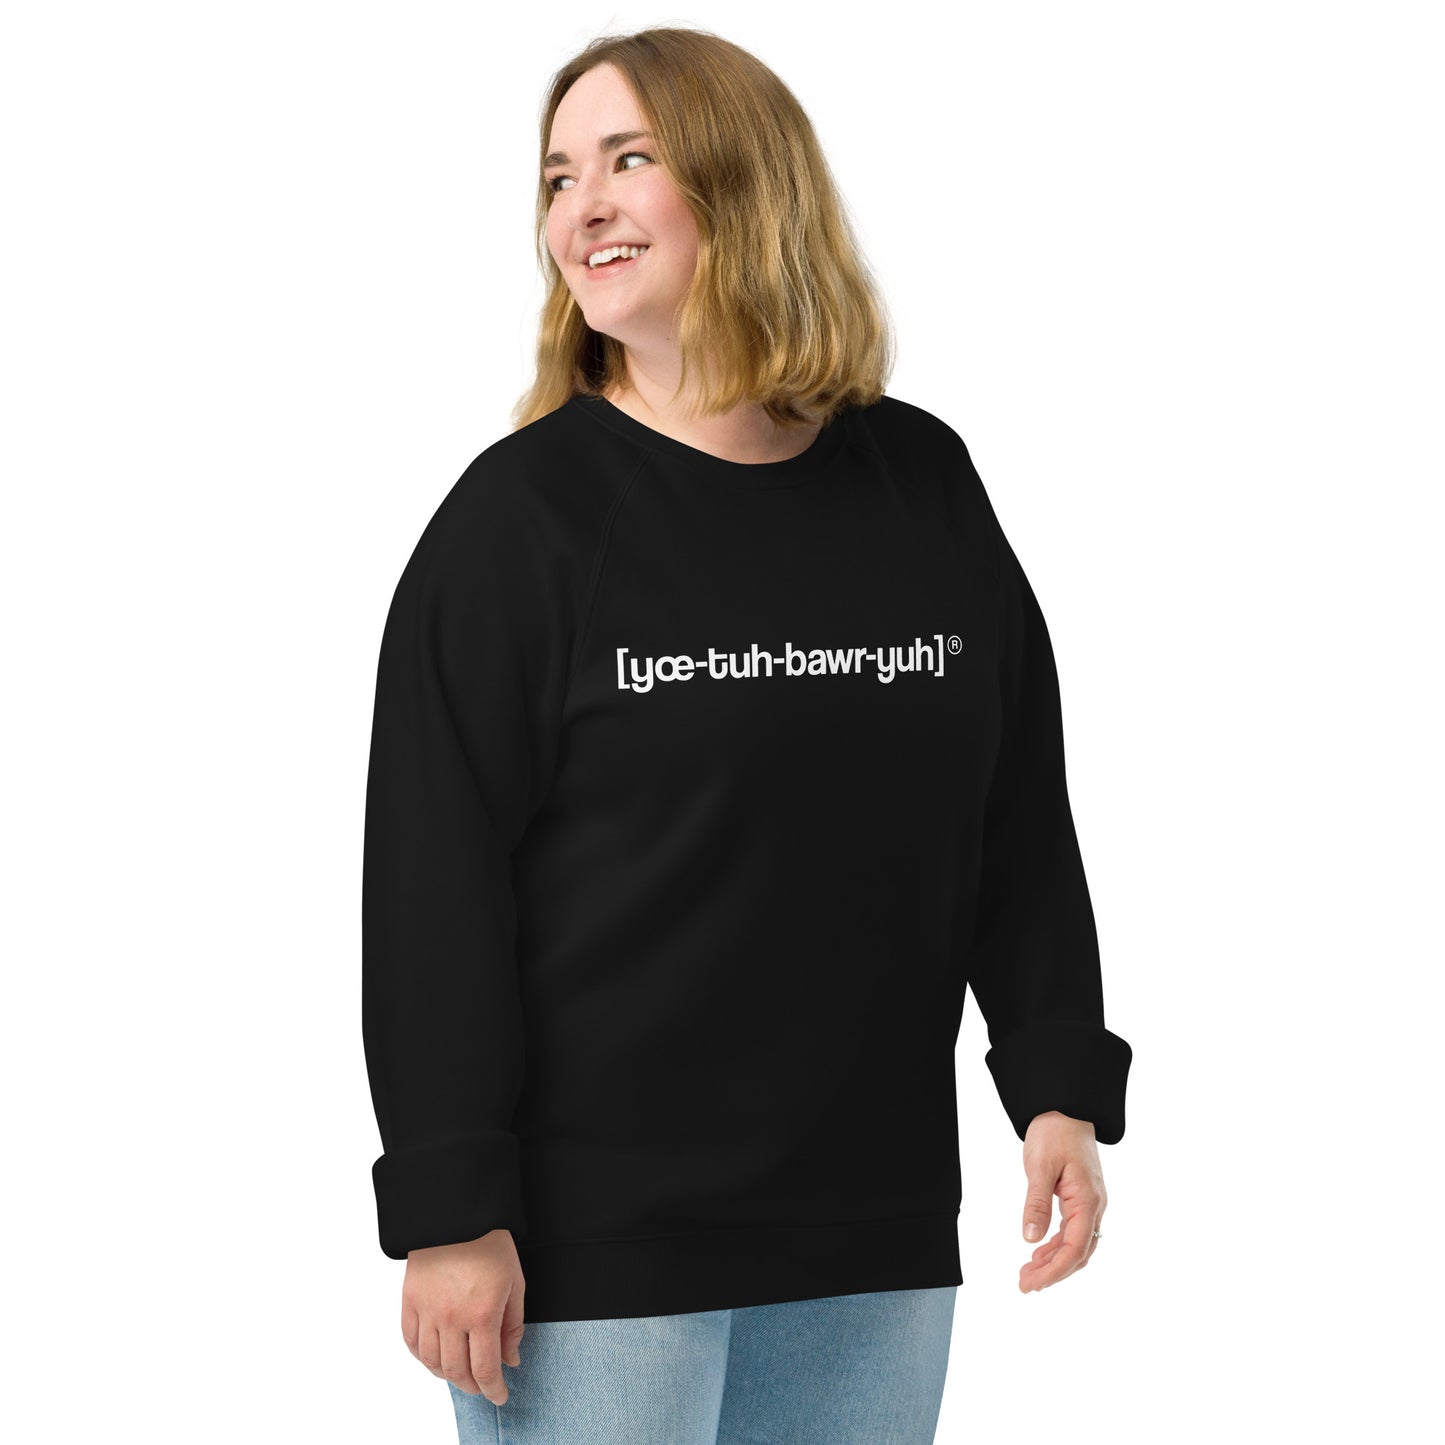 [yœ-tuh-bawr-yuh] ORIGINAL - Unisex organic raglan sweatshirt